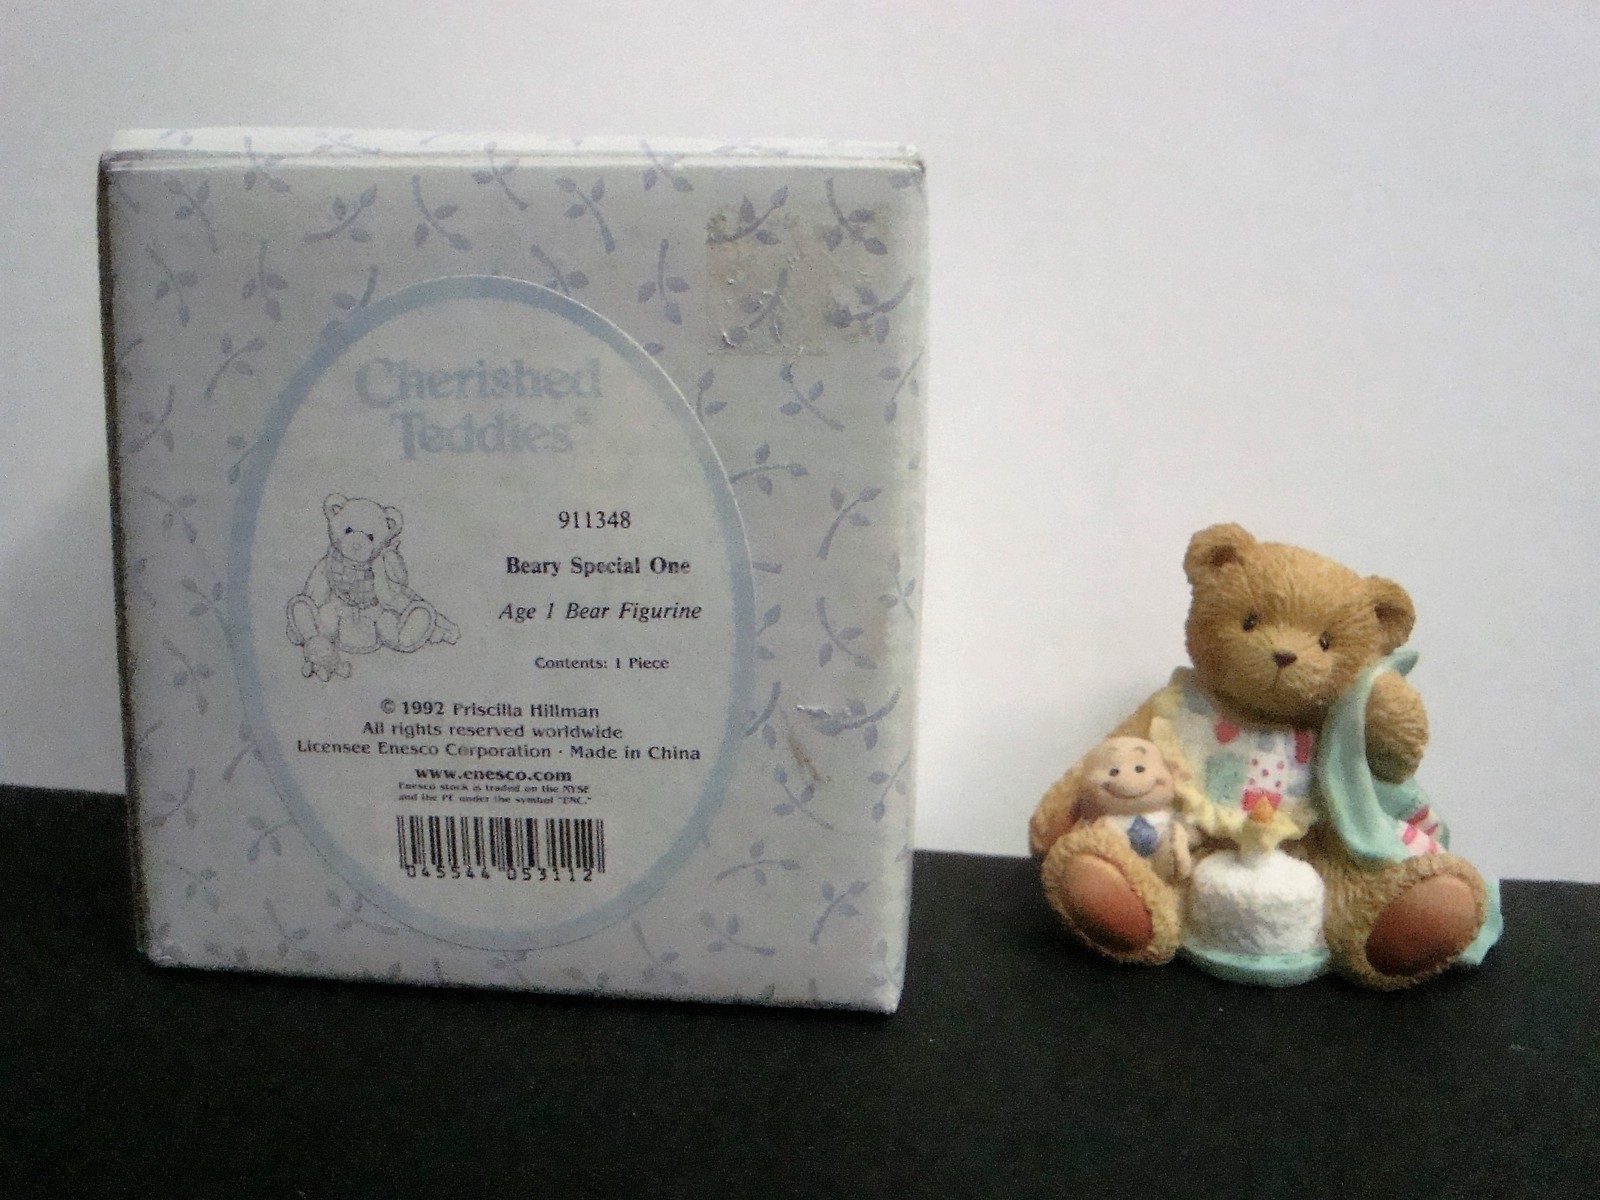 Cherished Teddies 911348 Beary Special One Age 1  Bear Figurine - $4.25